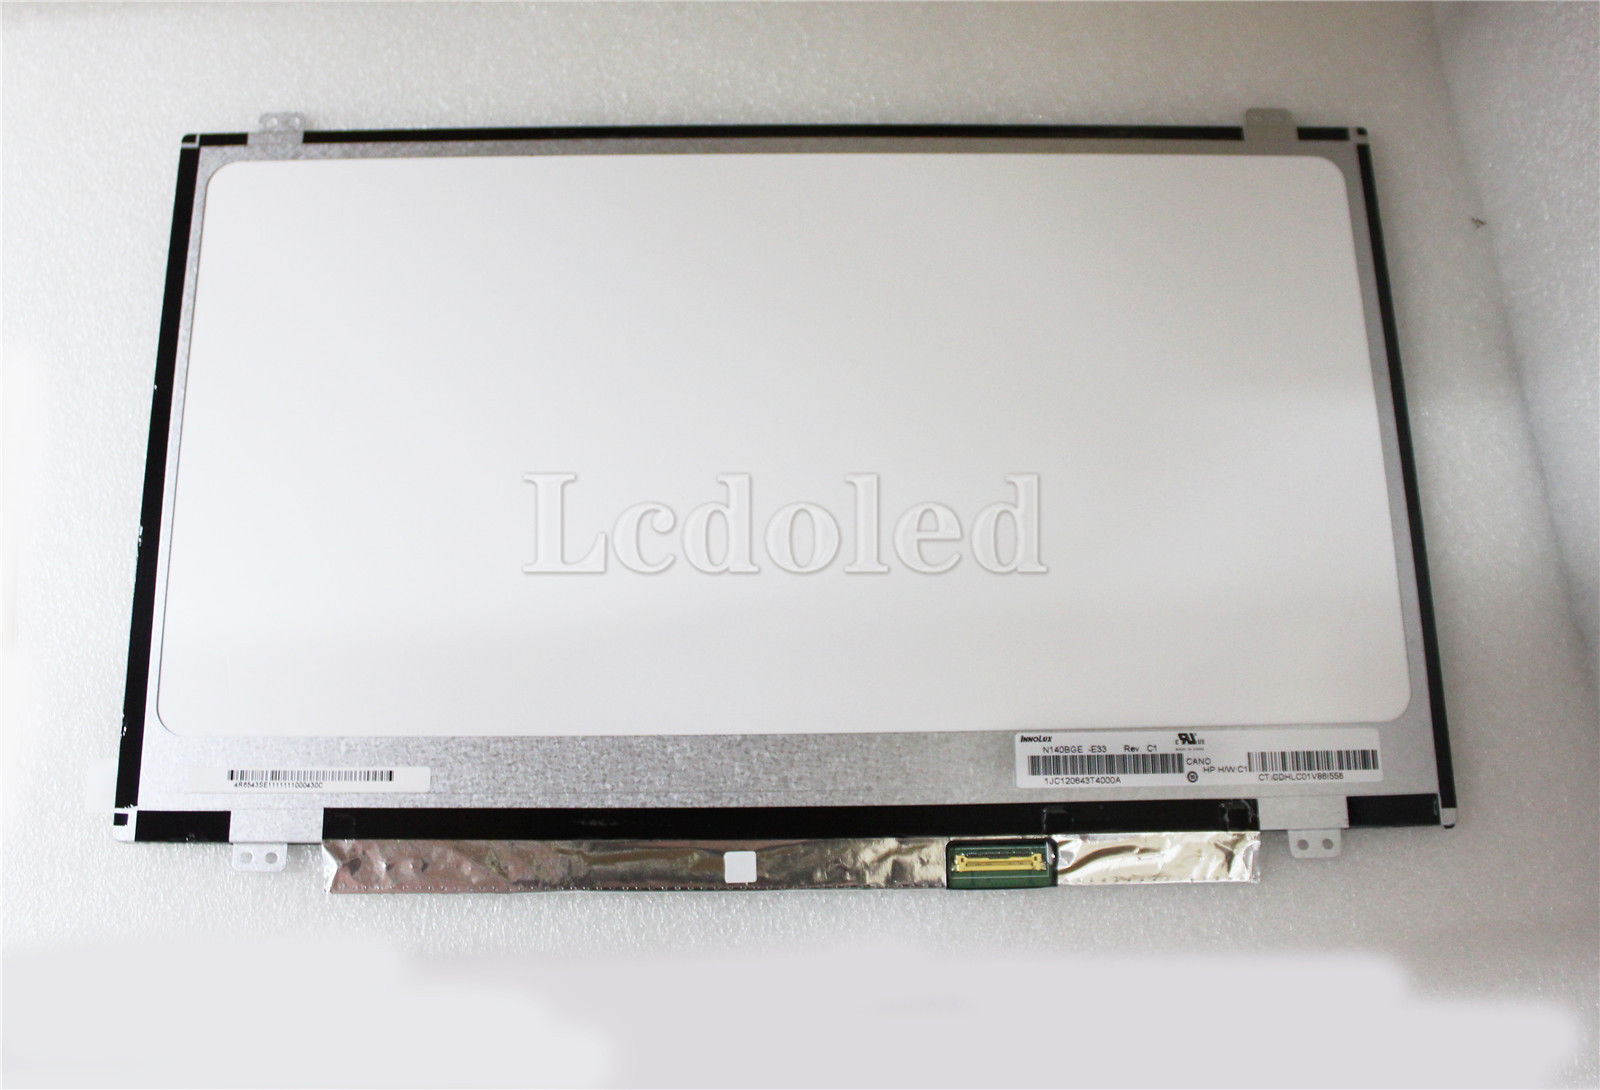 Màn hình Laptop - LCD Laptop Lenovo IdeaPad S400 S410 S415